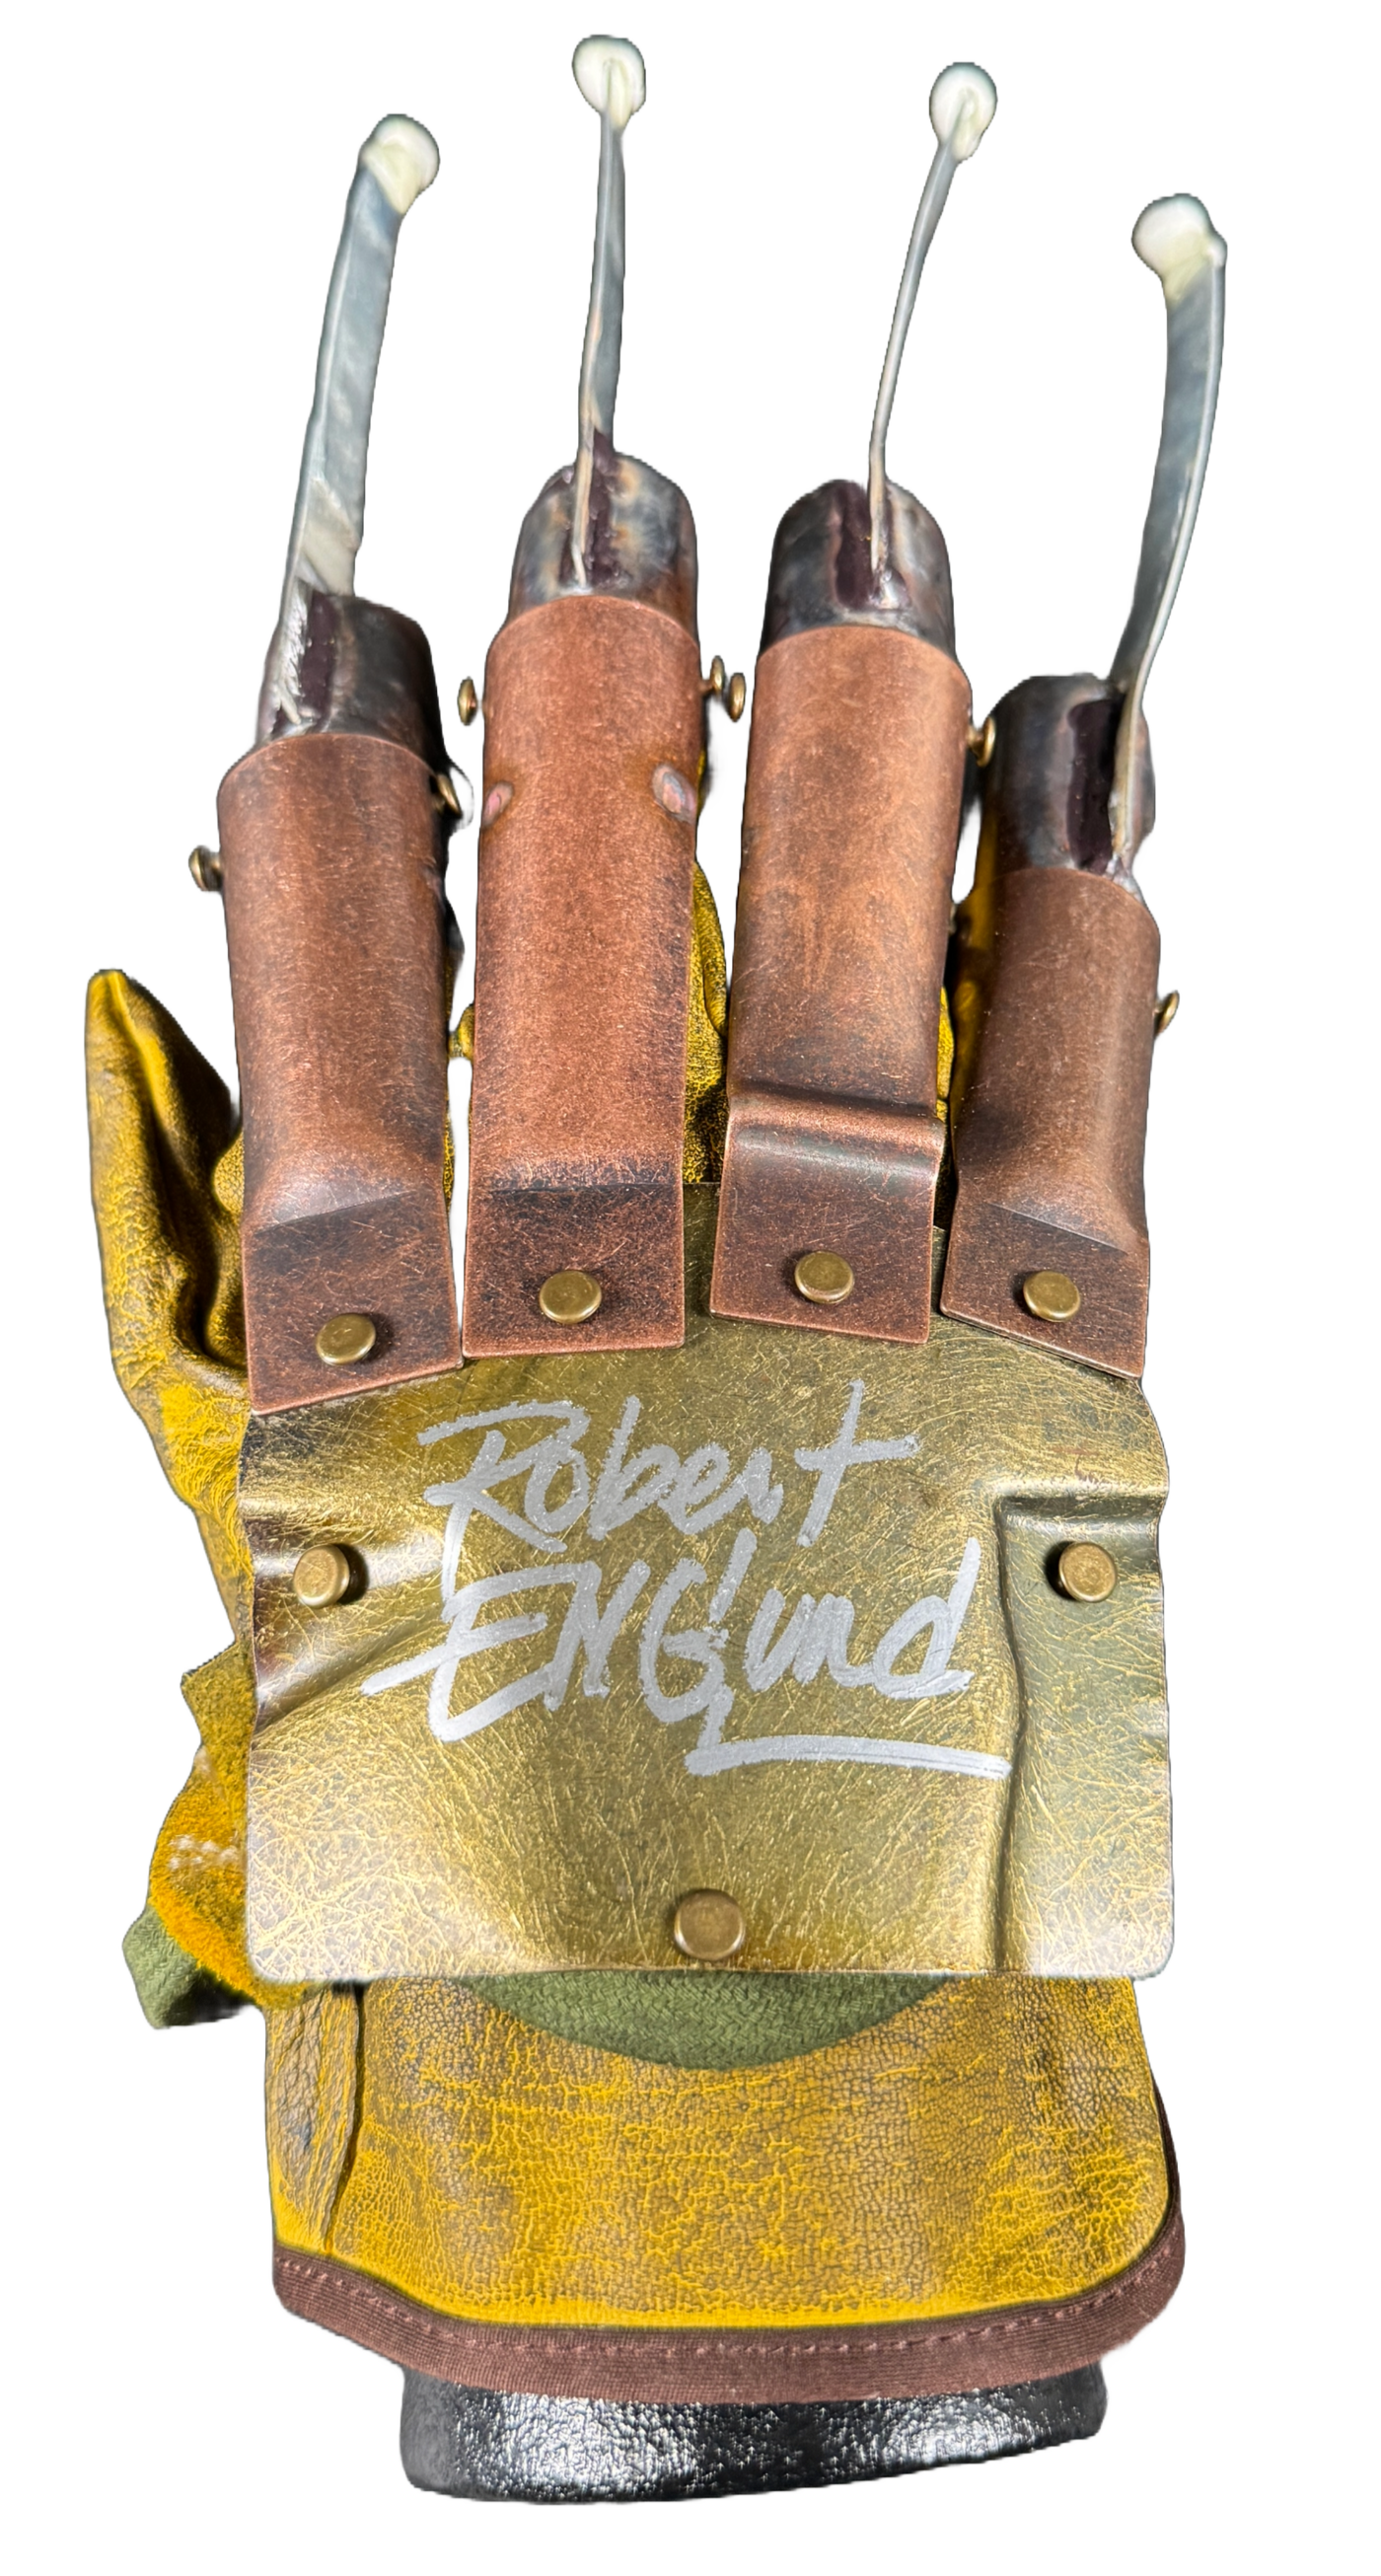 Robert Englund Signed NECA Freddy Krueger Glove A Nightmare on Elm Street Autographed JSA COA